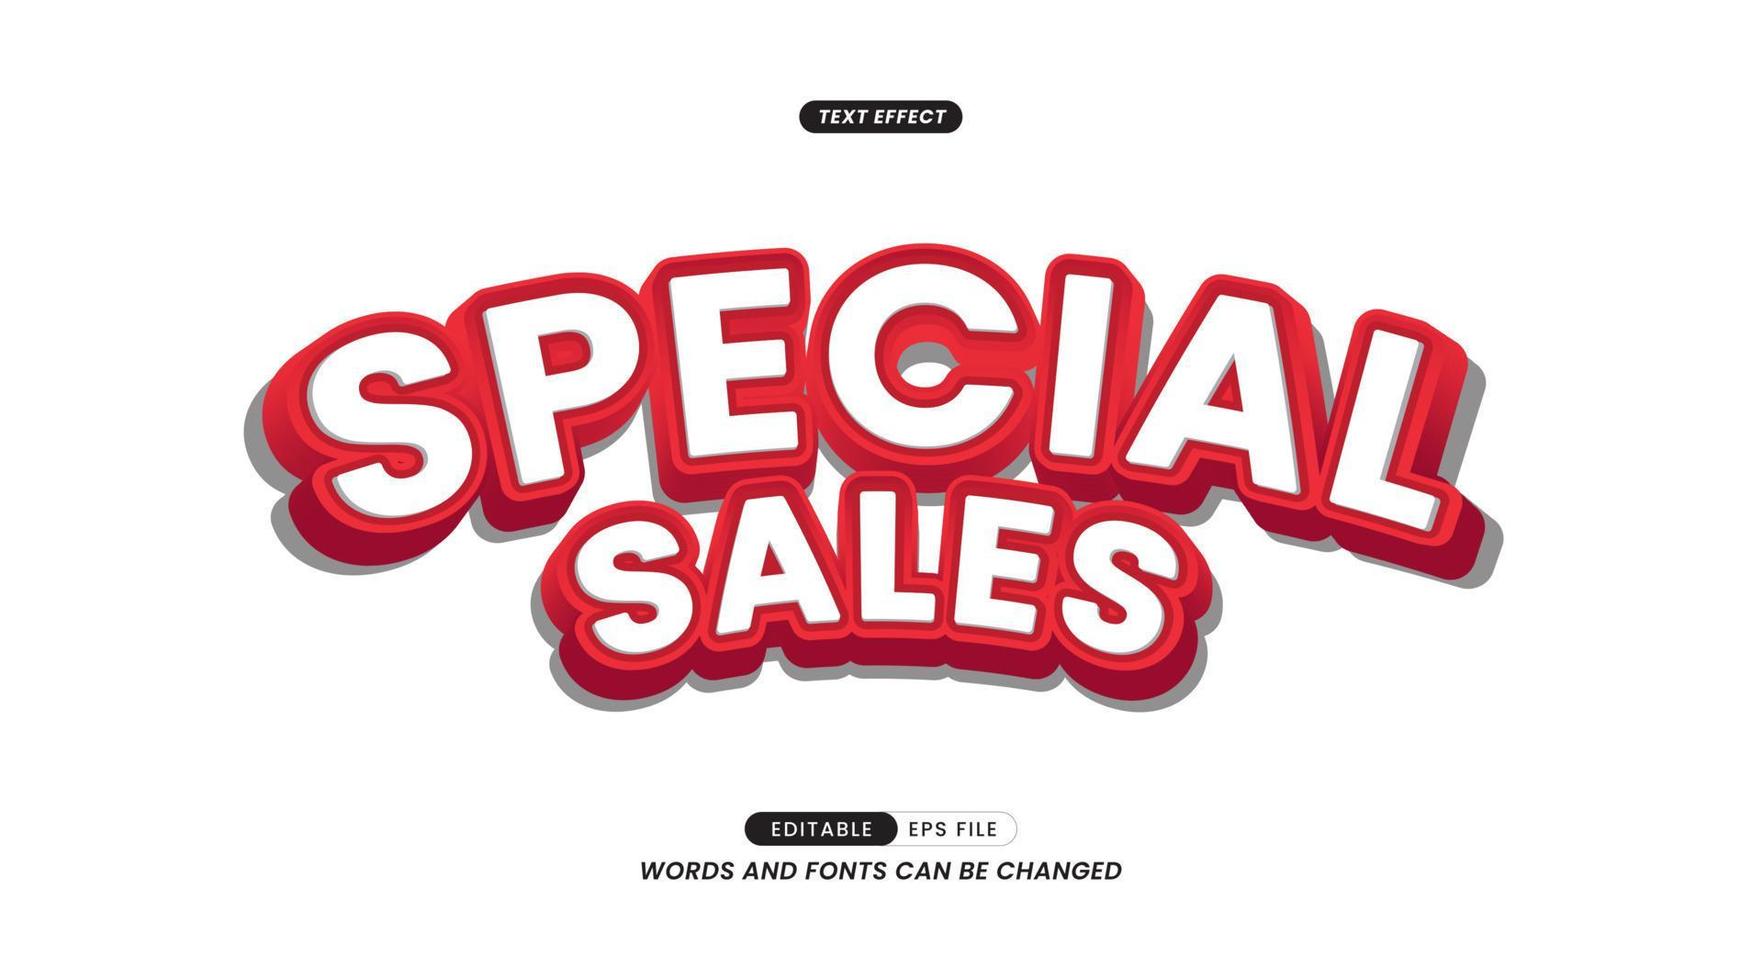 efectos de texto: texto de eslogan de ventas especial editable. vector